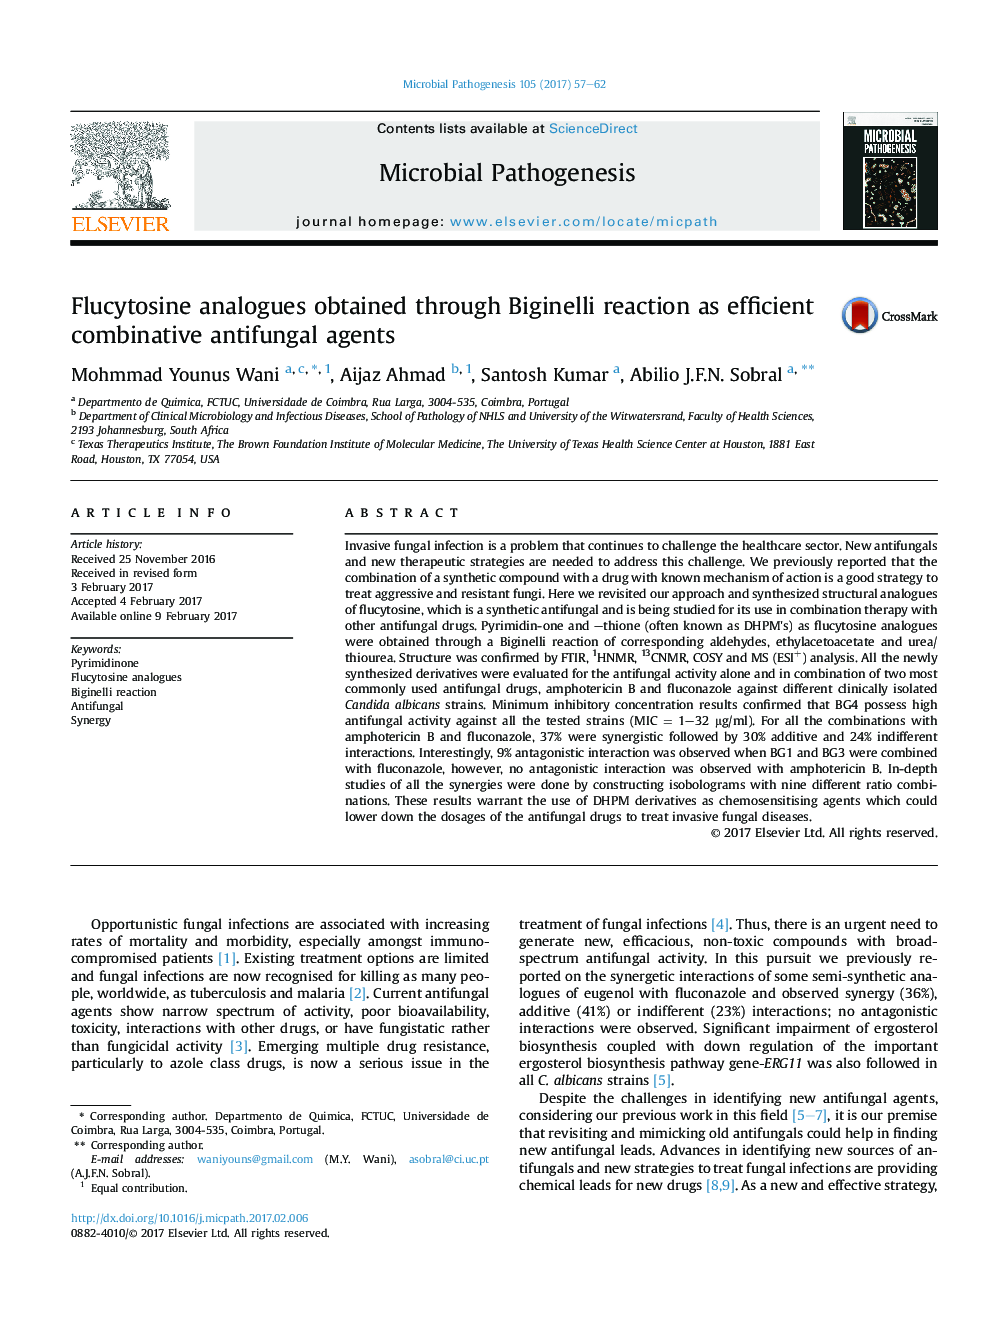 Flucytosine analogues obtained through Biginelli reaction as efficient combinative antifungal agents